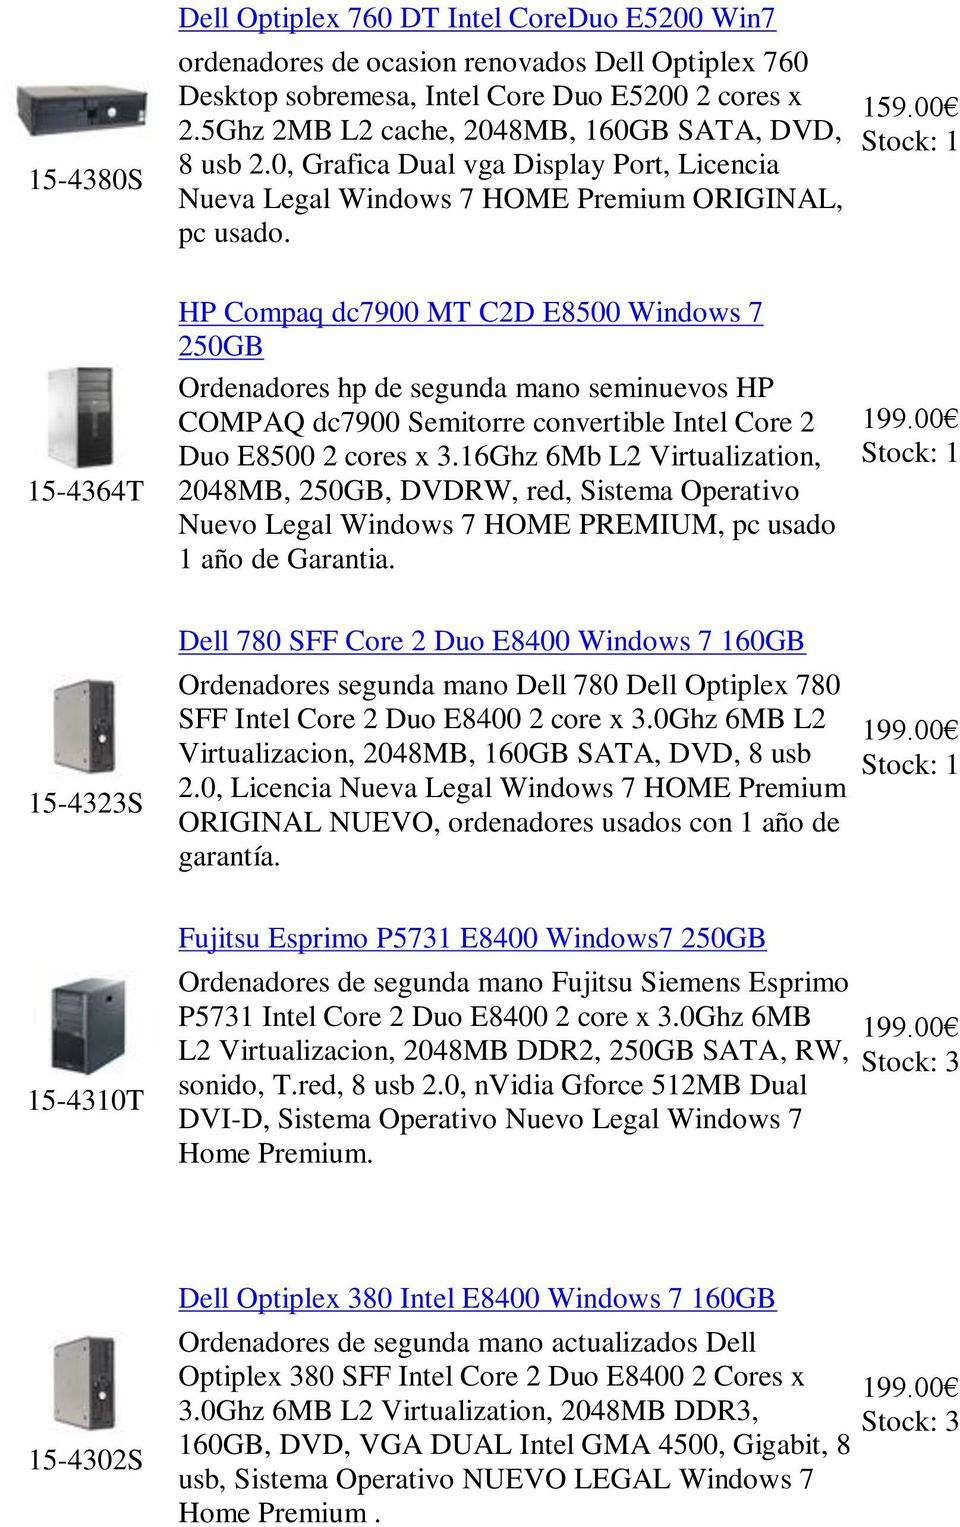 15-4364T HP Compaq dc7900 MT C2D E8500 Windows 7 250GB Ordenadores hp de segunda mano seminuevos HP COMPAQ dc7900 Semitorre convertible Intel Core 2 Duo E8500 2 cores x 3.